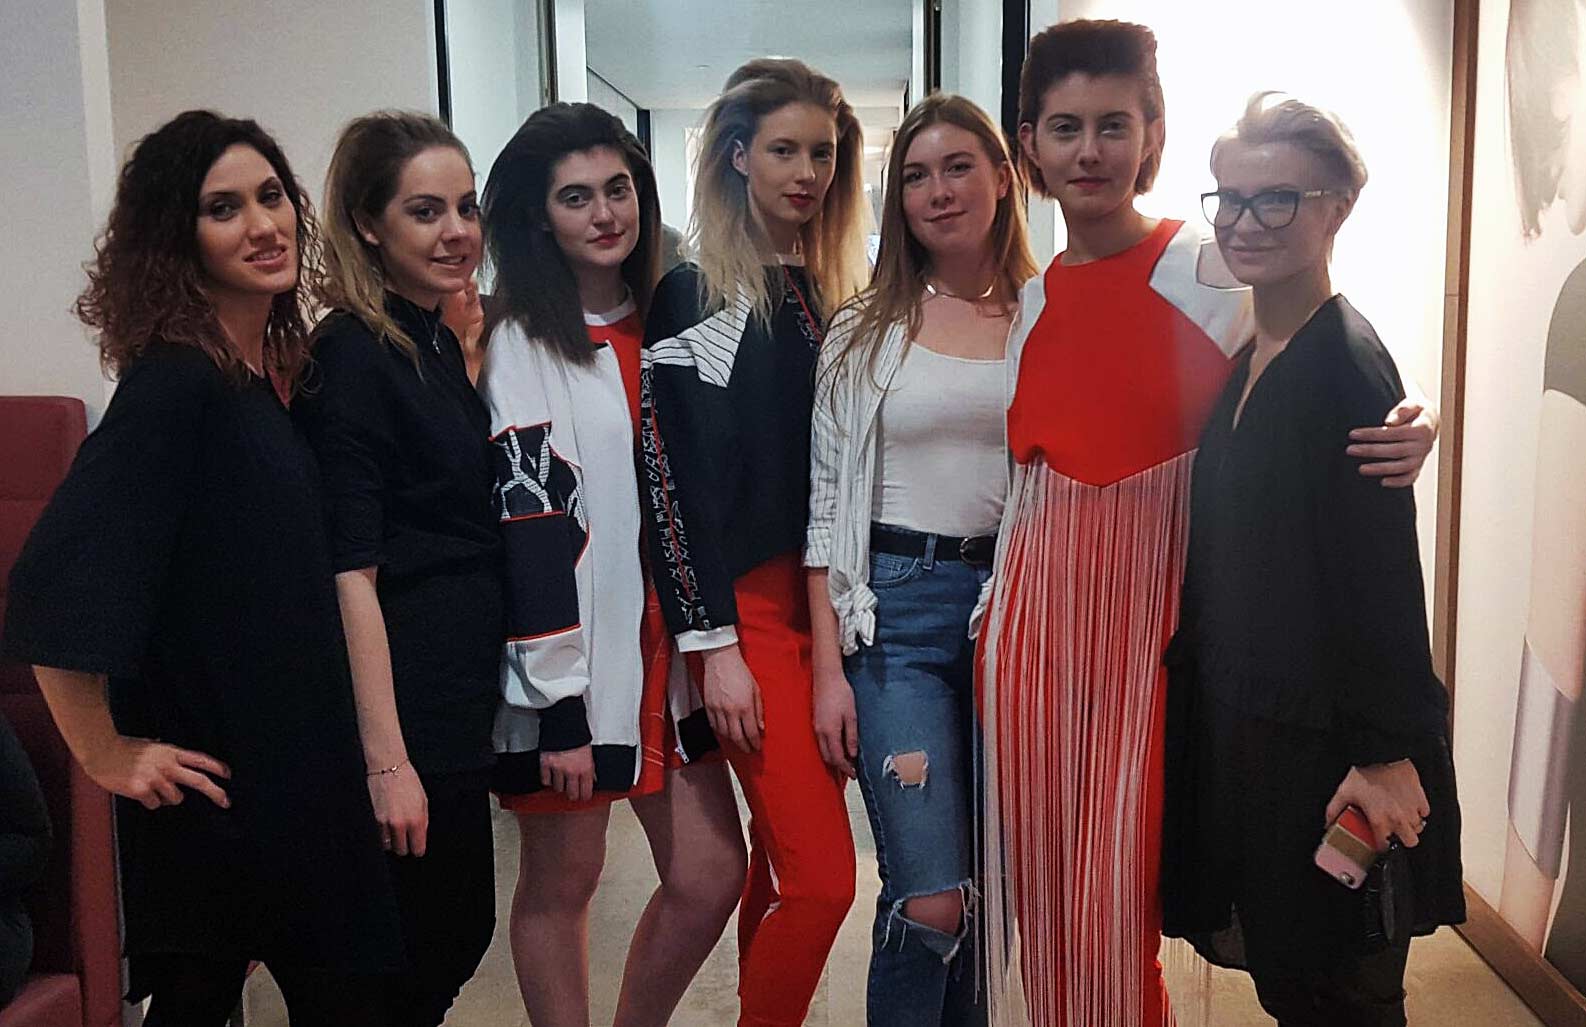 Jospeh Ferraro Team, Harrogate, from left to right Rita Tuska, Elaine Sneddon and Marzena Serafin (dressed in all black) with models and the designer at London Fashion Week